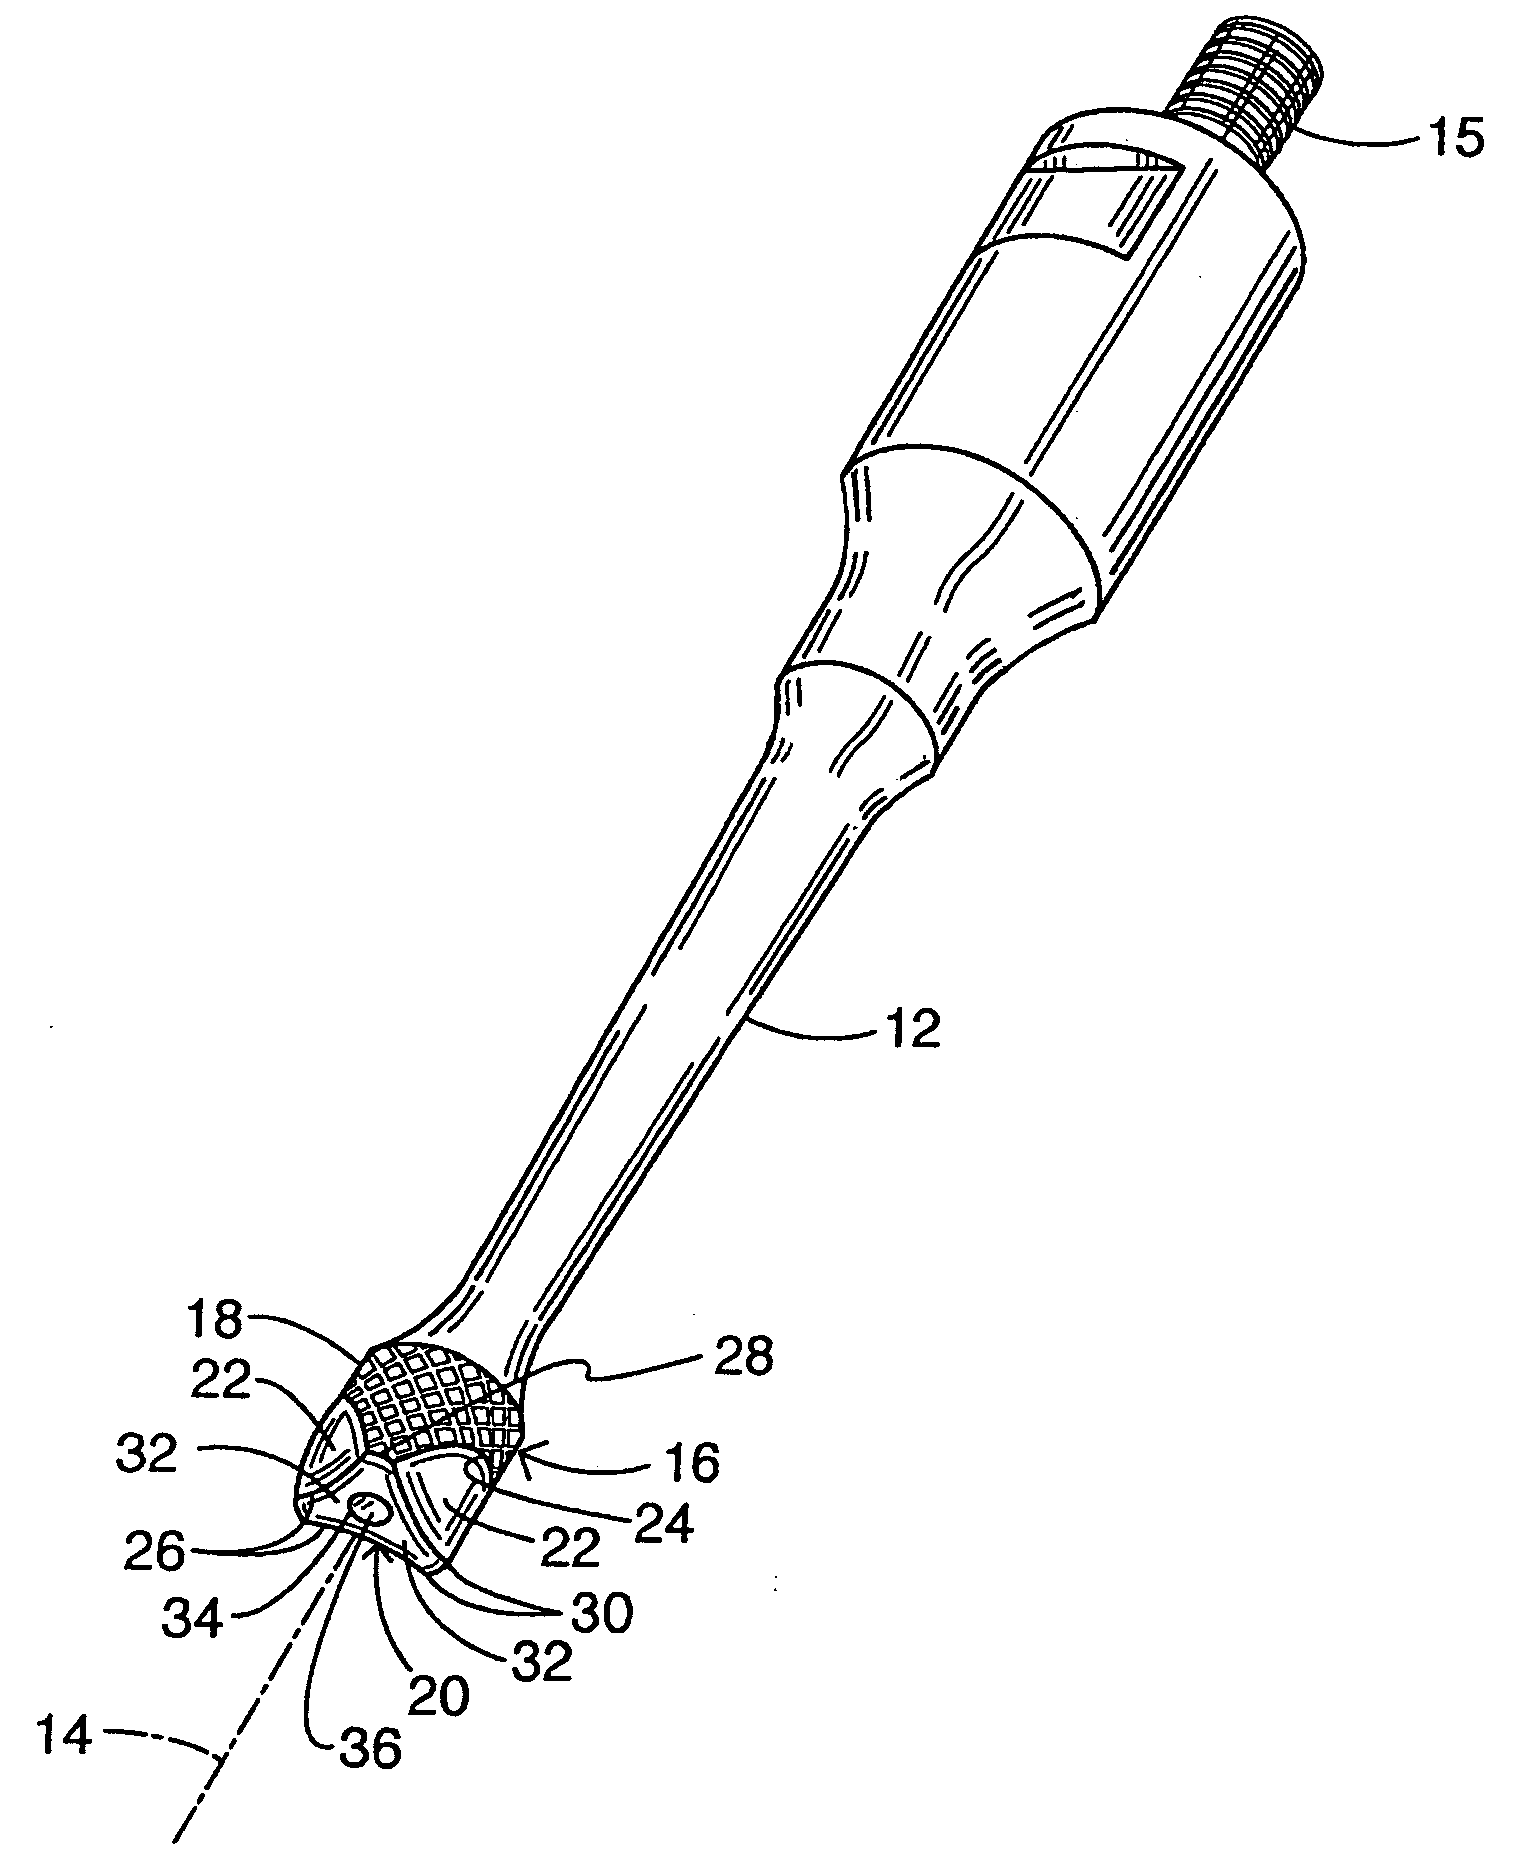 Ultrasonic wound debrider probe and method of use